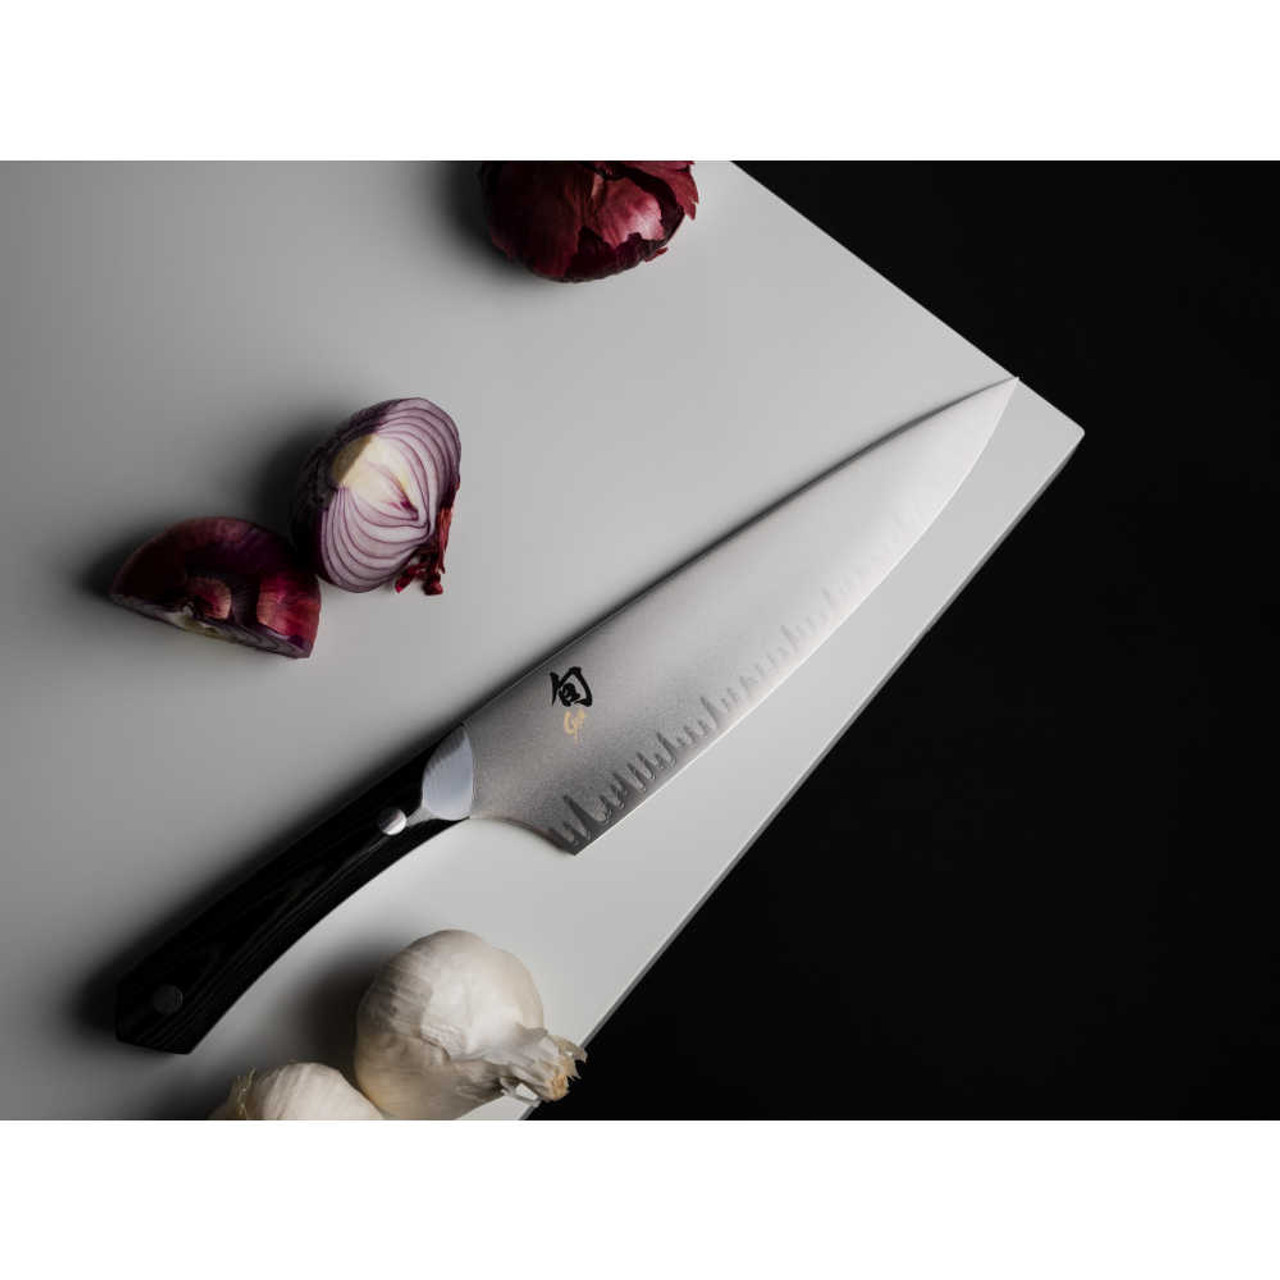 Shun Sora Chef's Knife